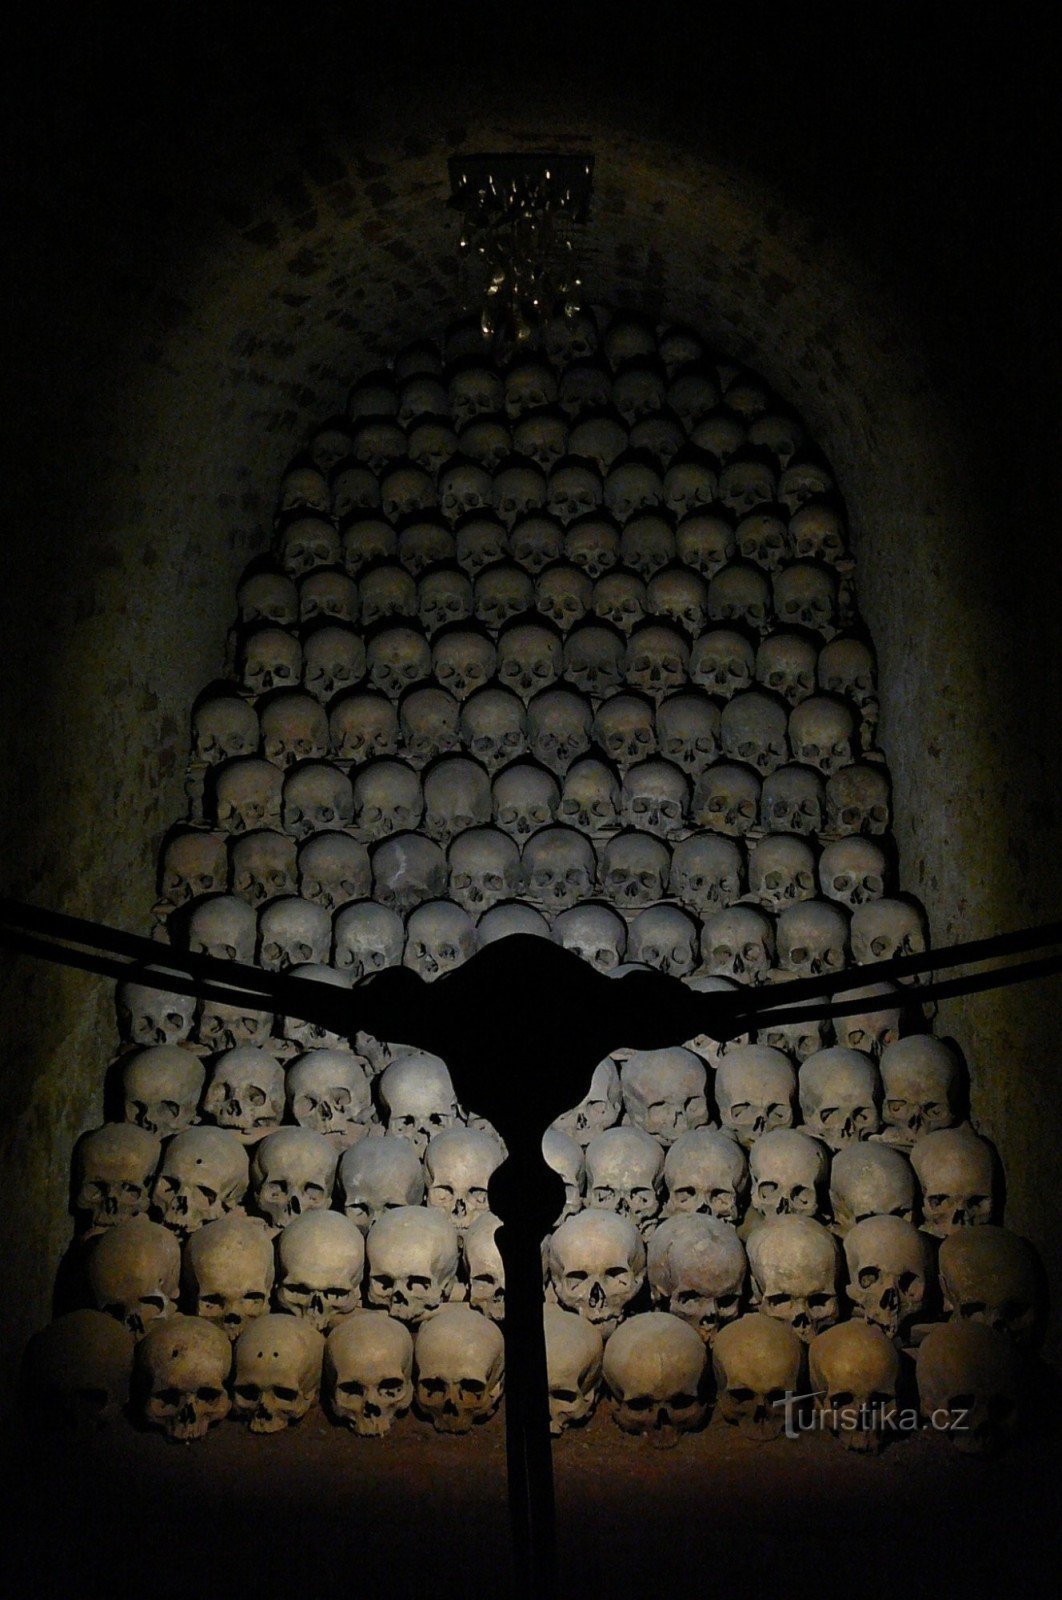 Jaromír Gargulák による涙の彫刻がある納骨堂の最も印象的な部分 (天井近く)